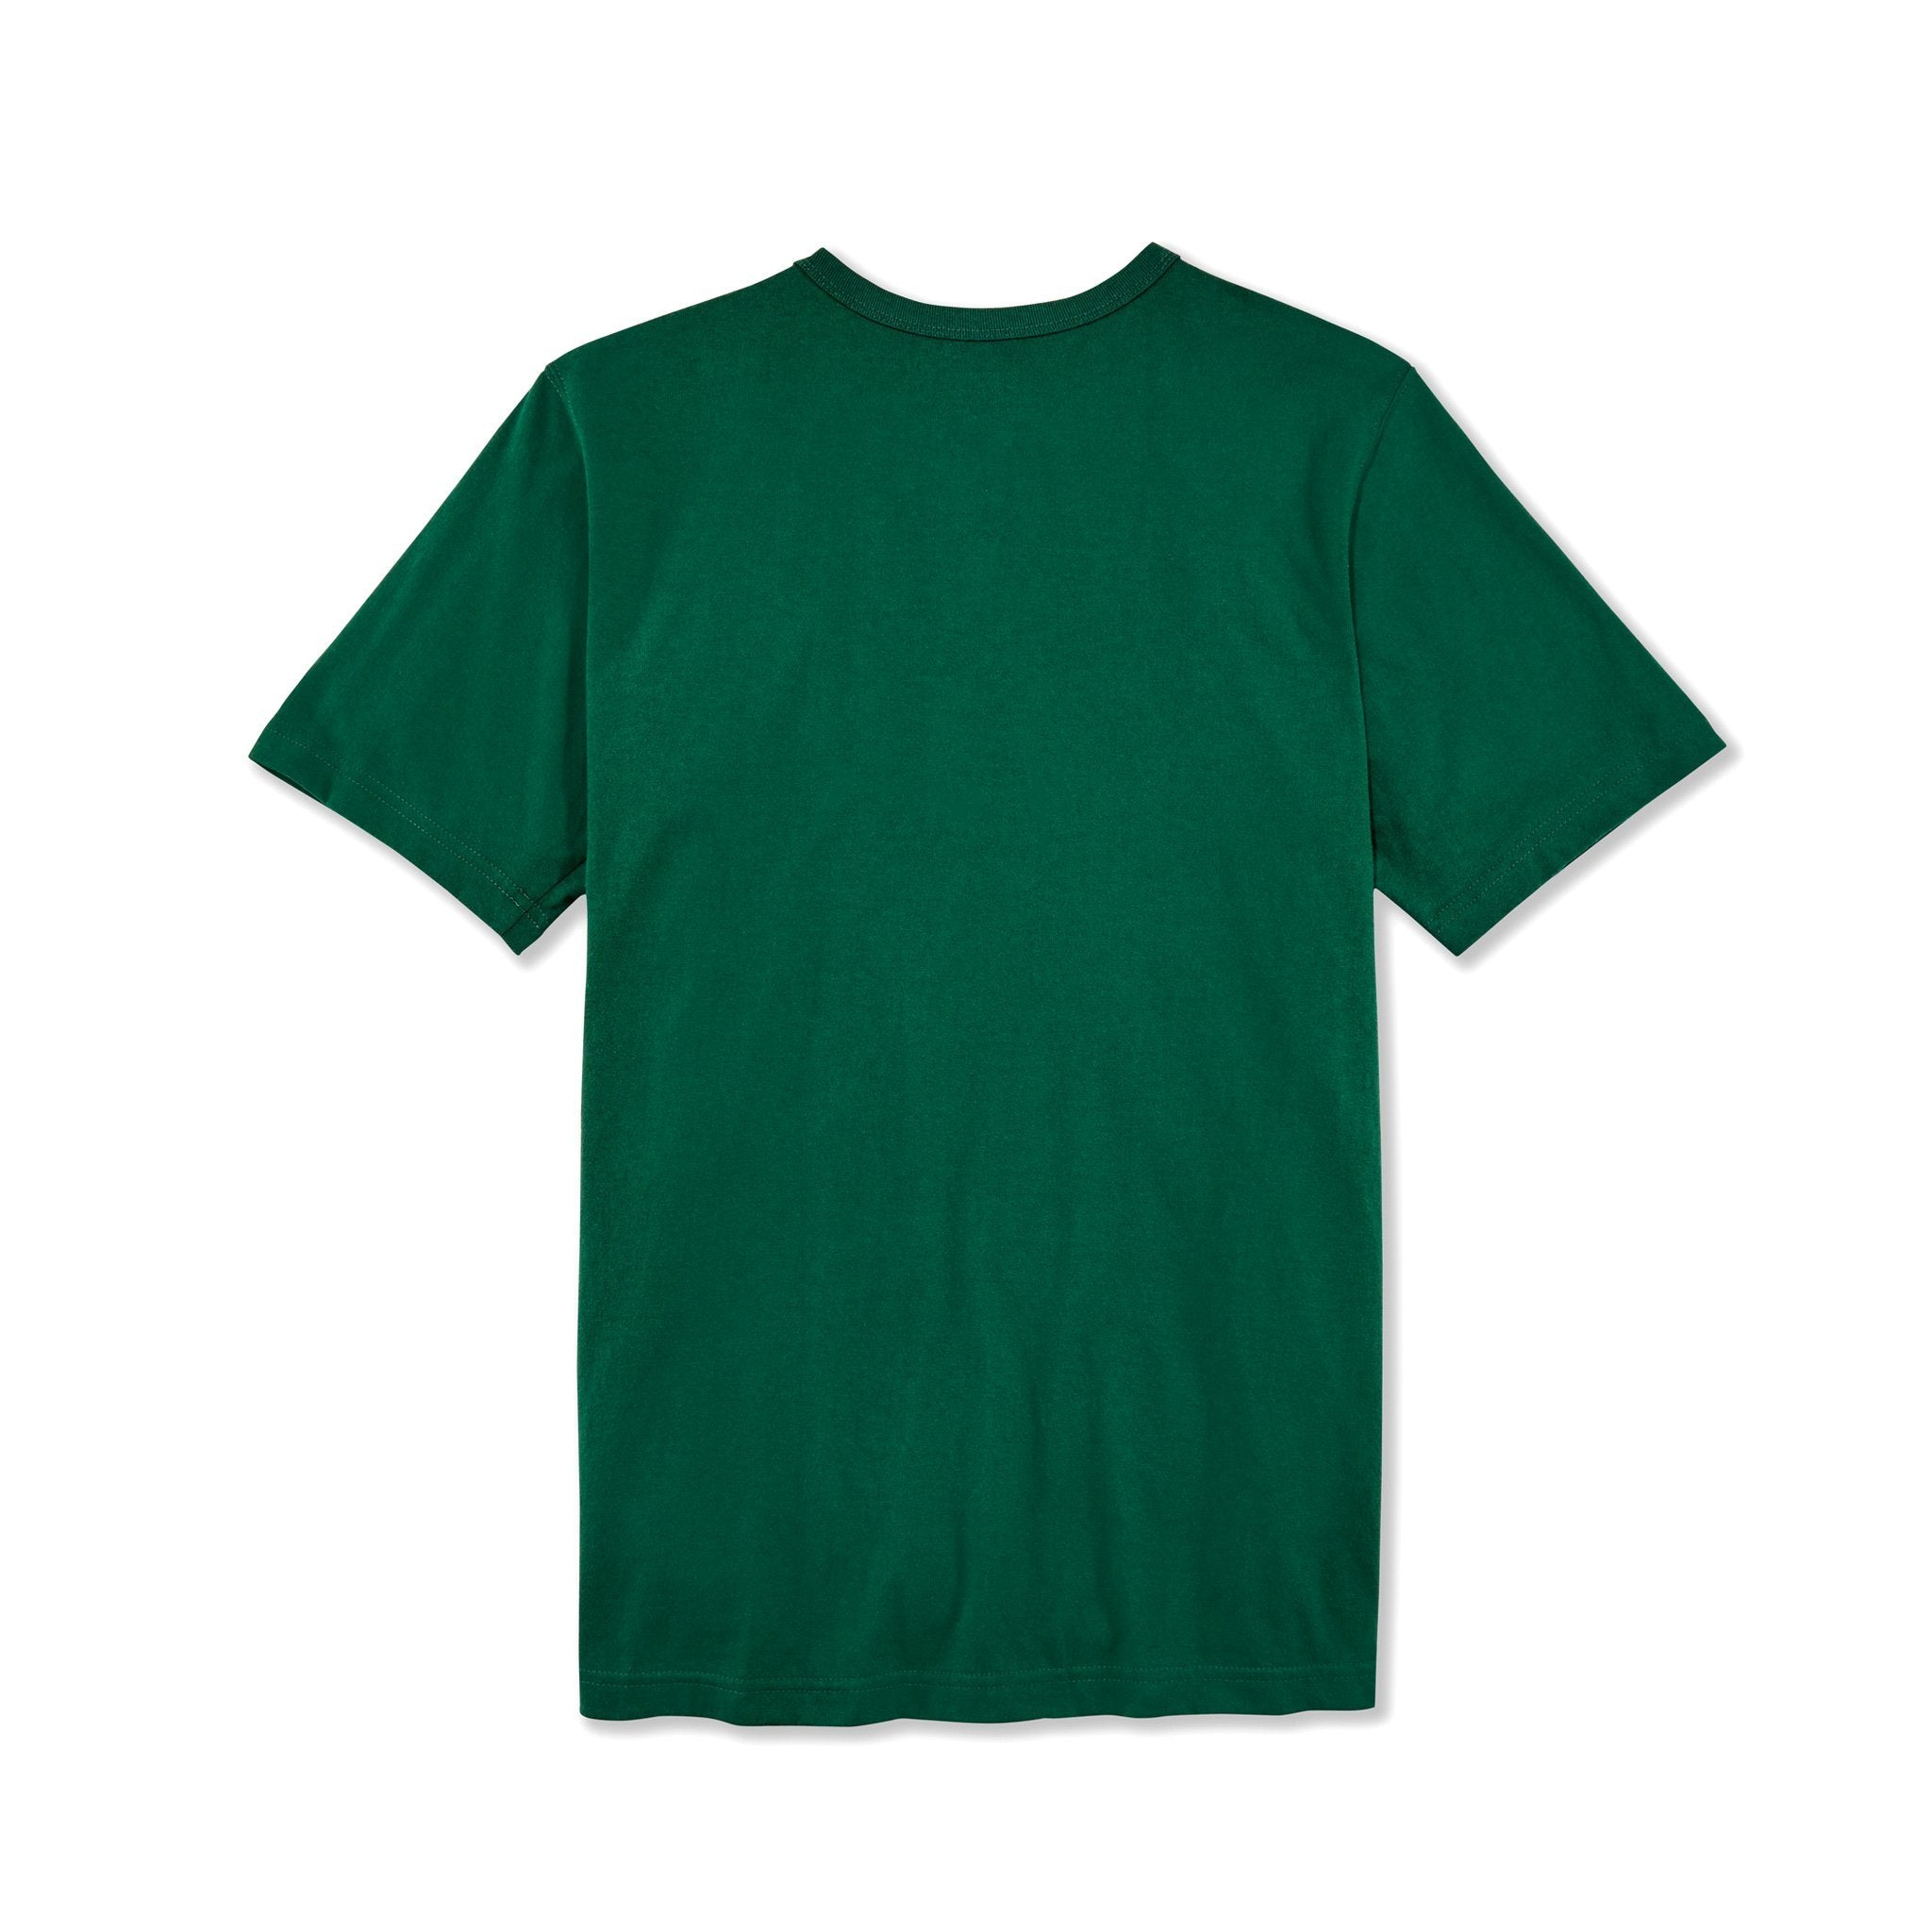 Tilley Men's Crewneck T-Shirt in Green